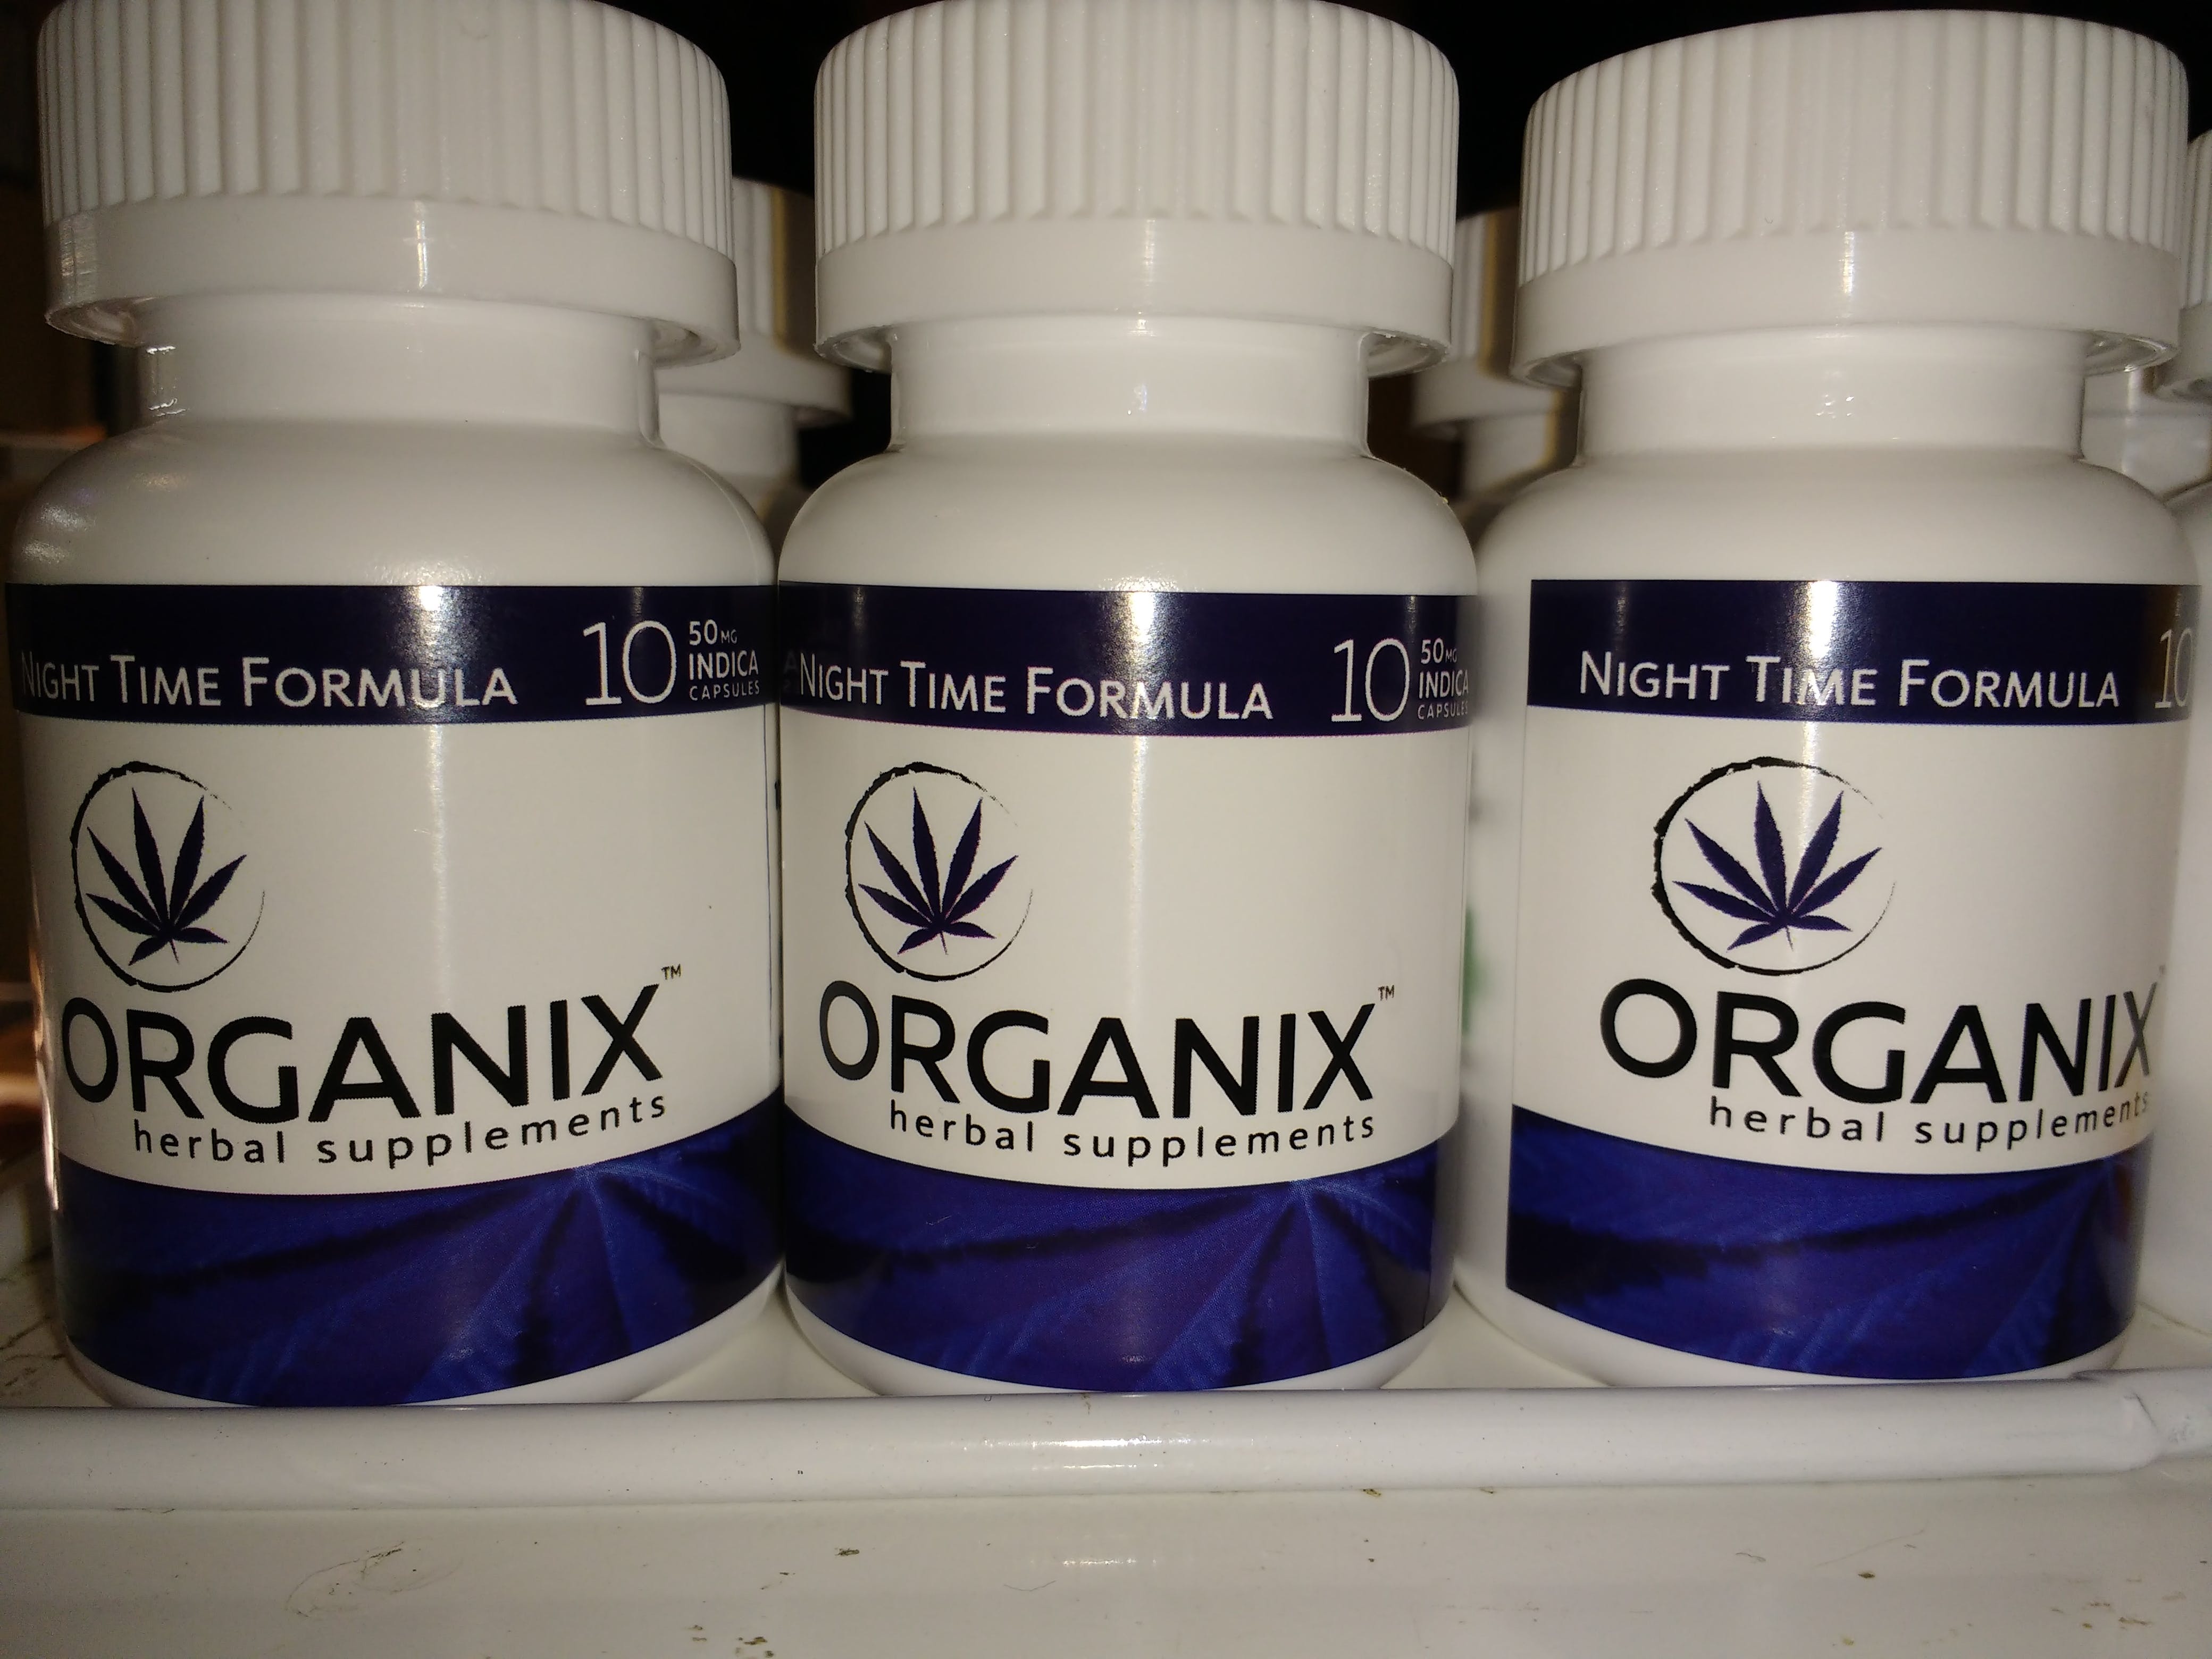 tincture-organix-herbal-supplements-50mg-bottle